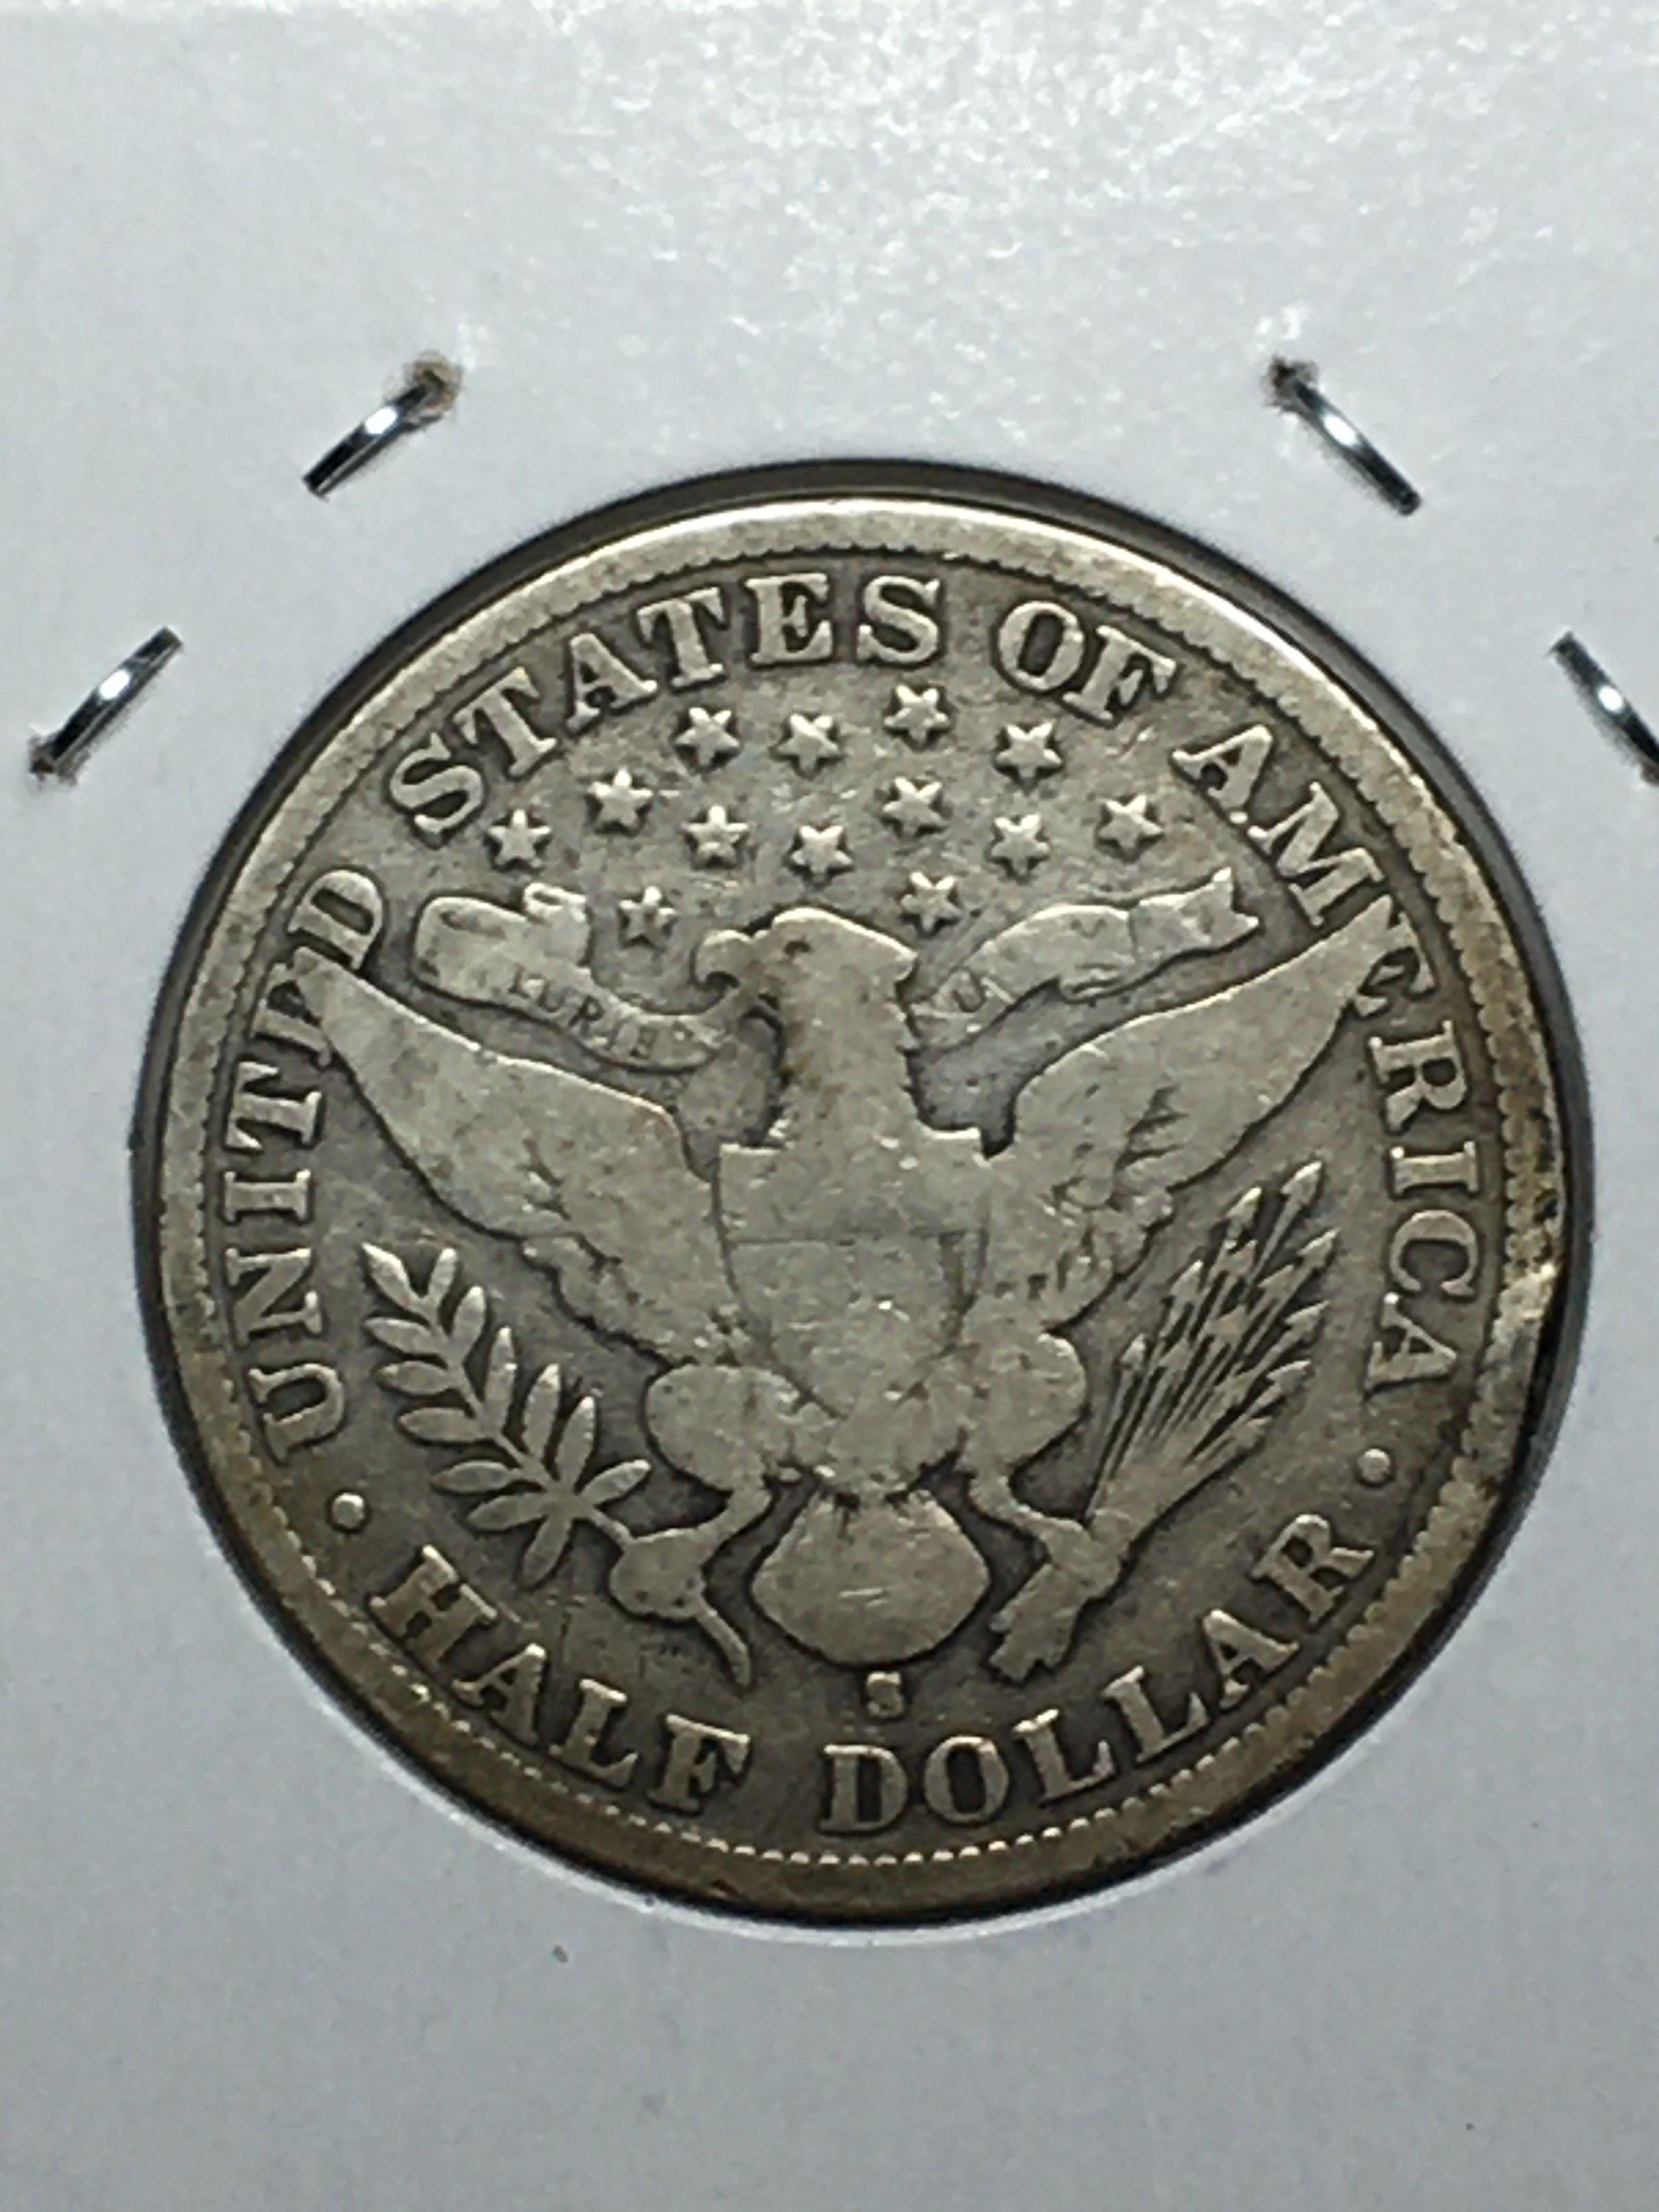 1903 S Barber Half Dollar